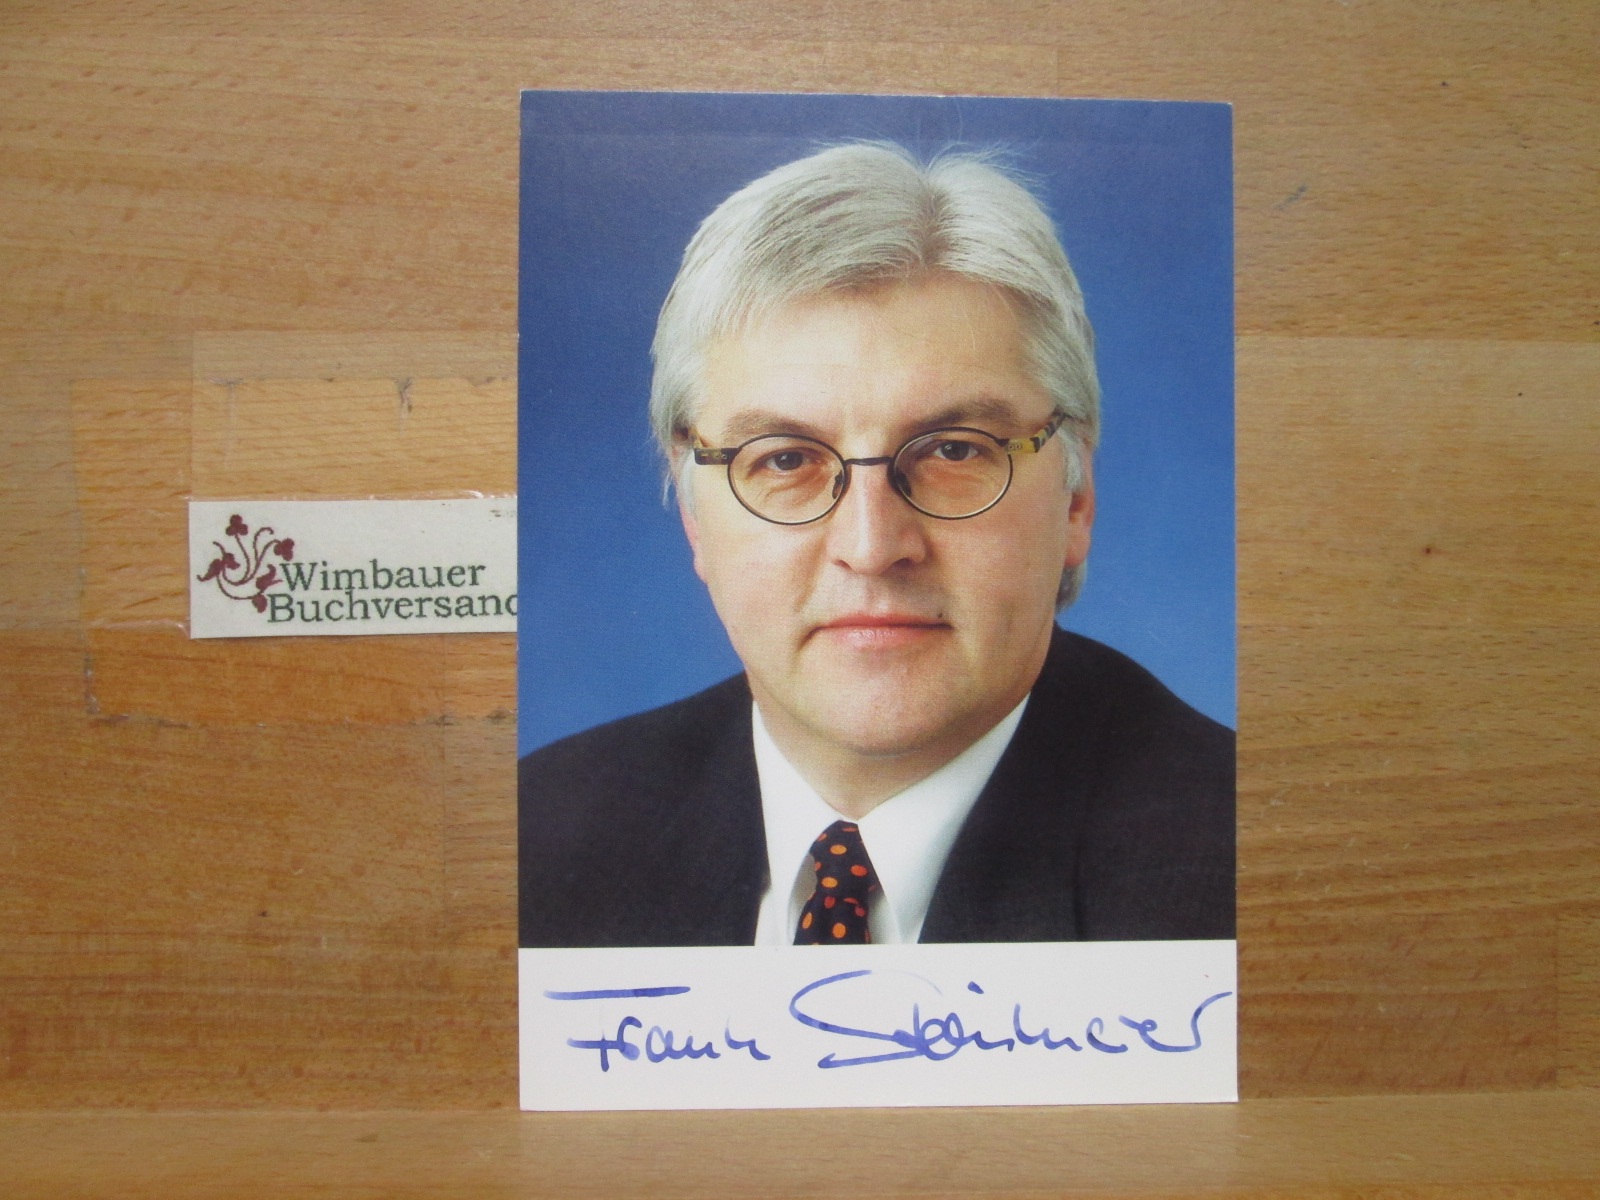 Frank-Walter Steinmeier AK Bundespräsident Autogrammkarte original handsigniert 